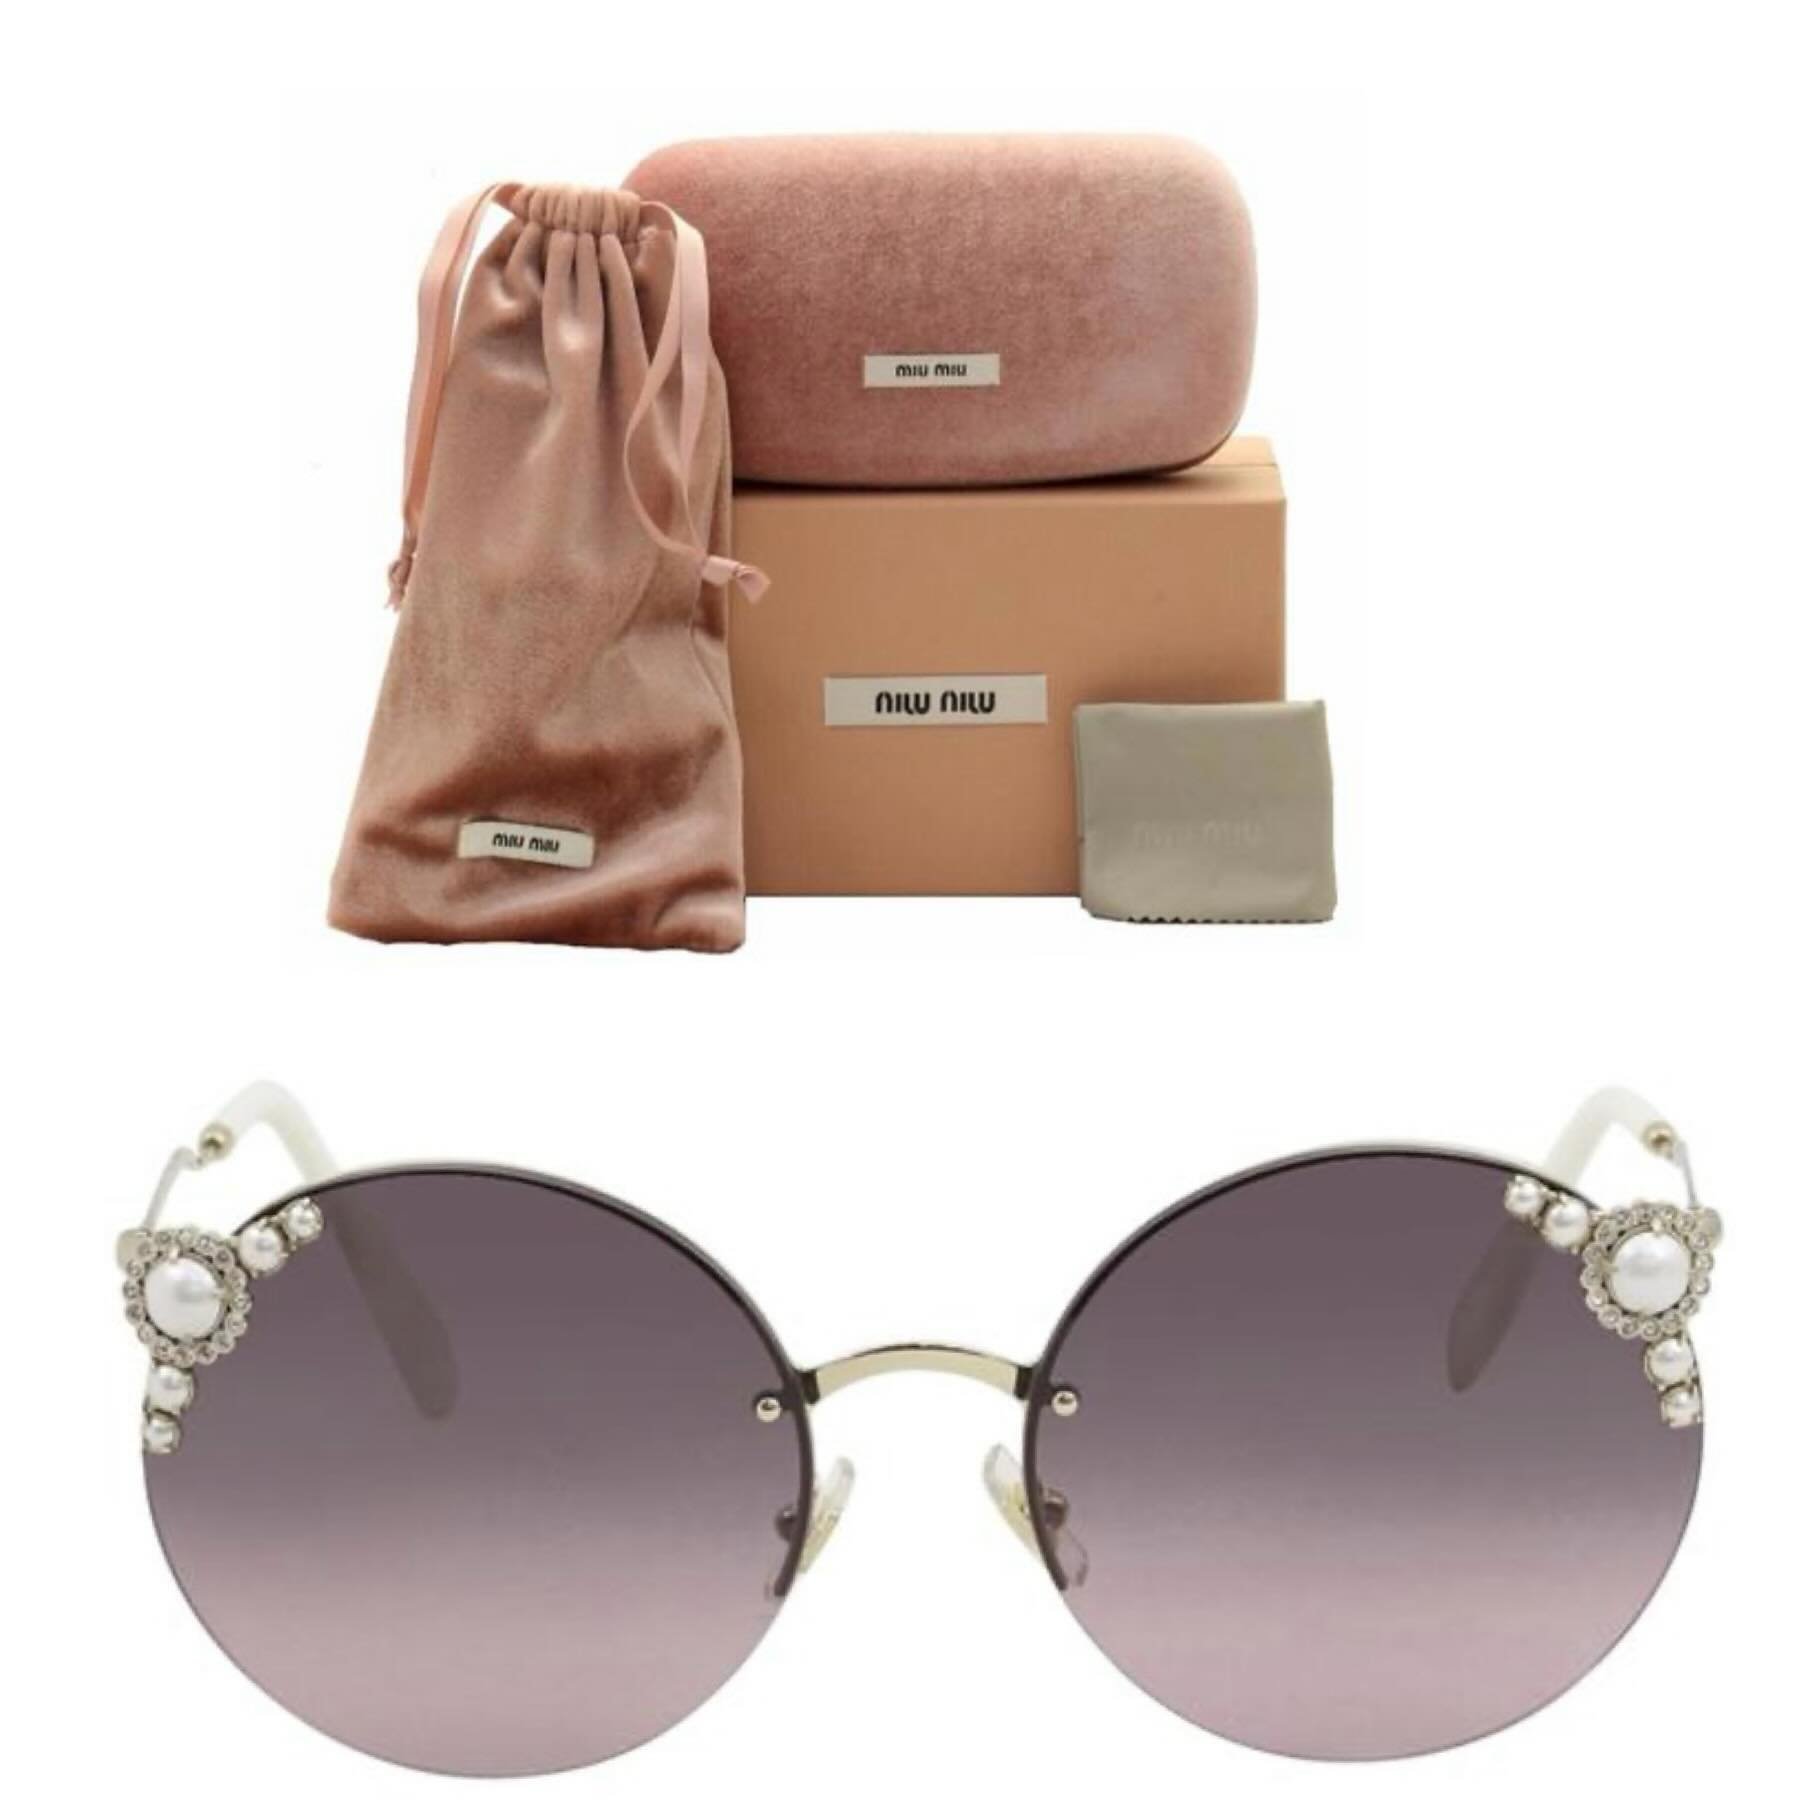 Miu Miu Fashion Round Sunglasses SMU52T/52T #miumiusunglasses #redeuxapparel #consignmentboutique #designersunglasses #shoplocal